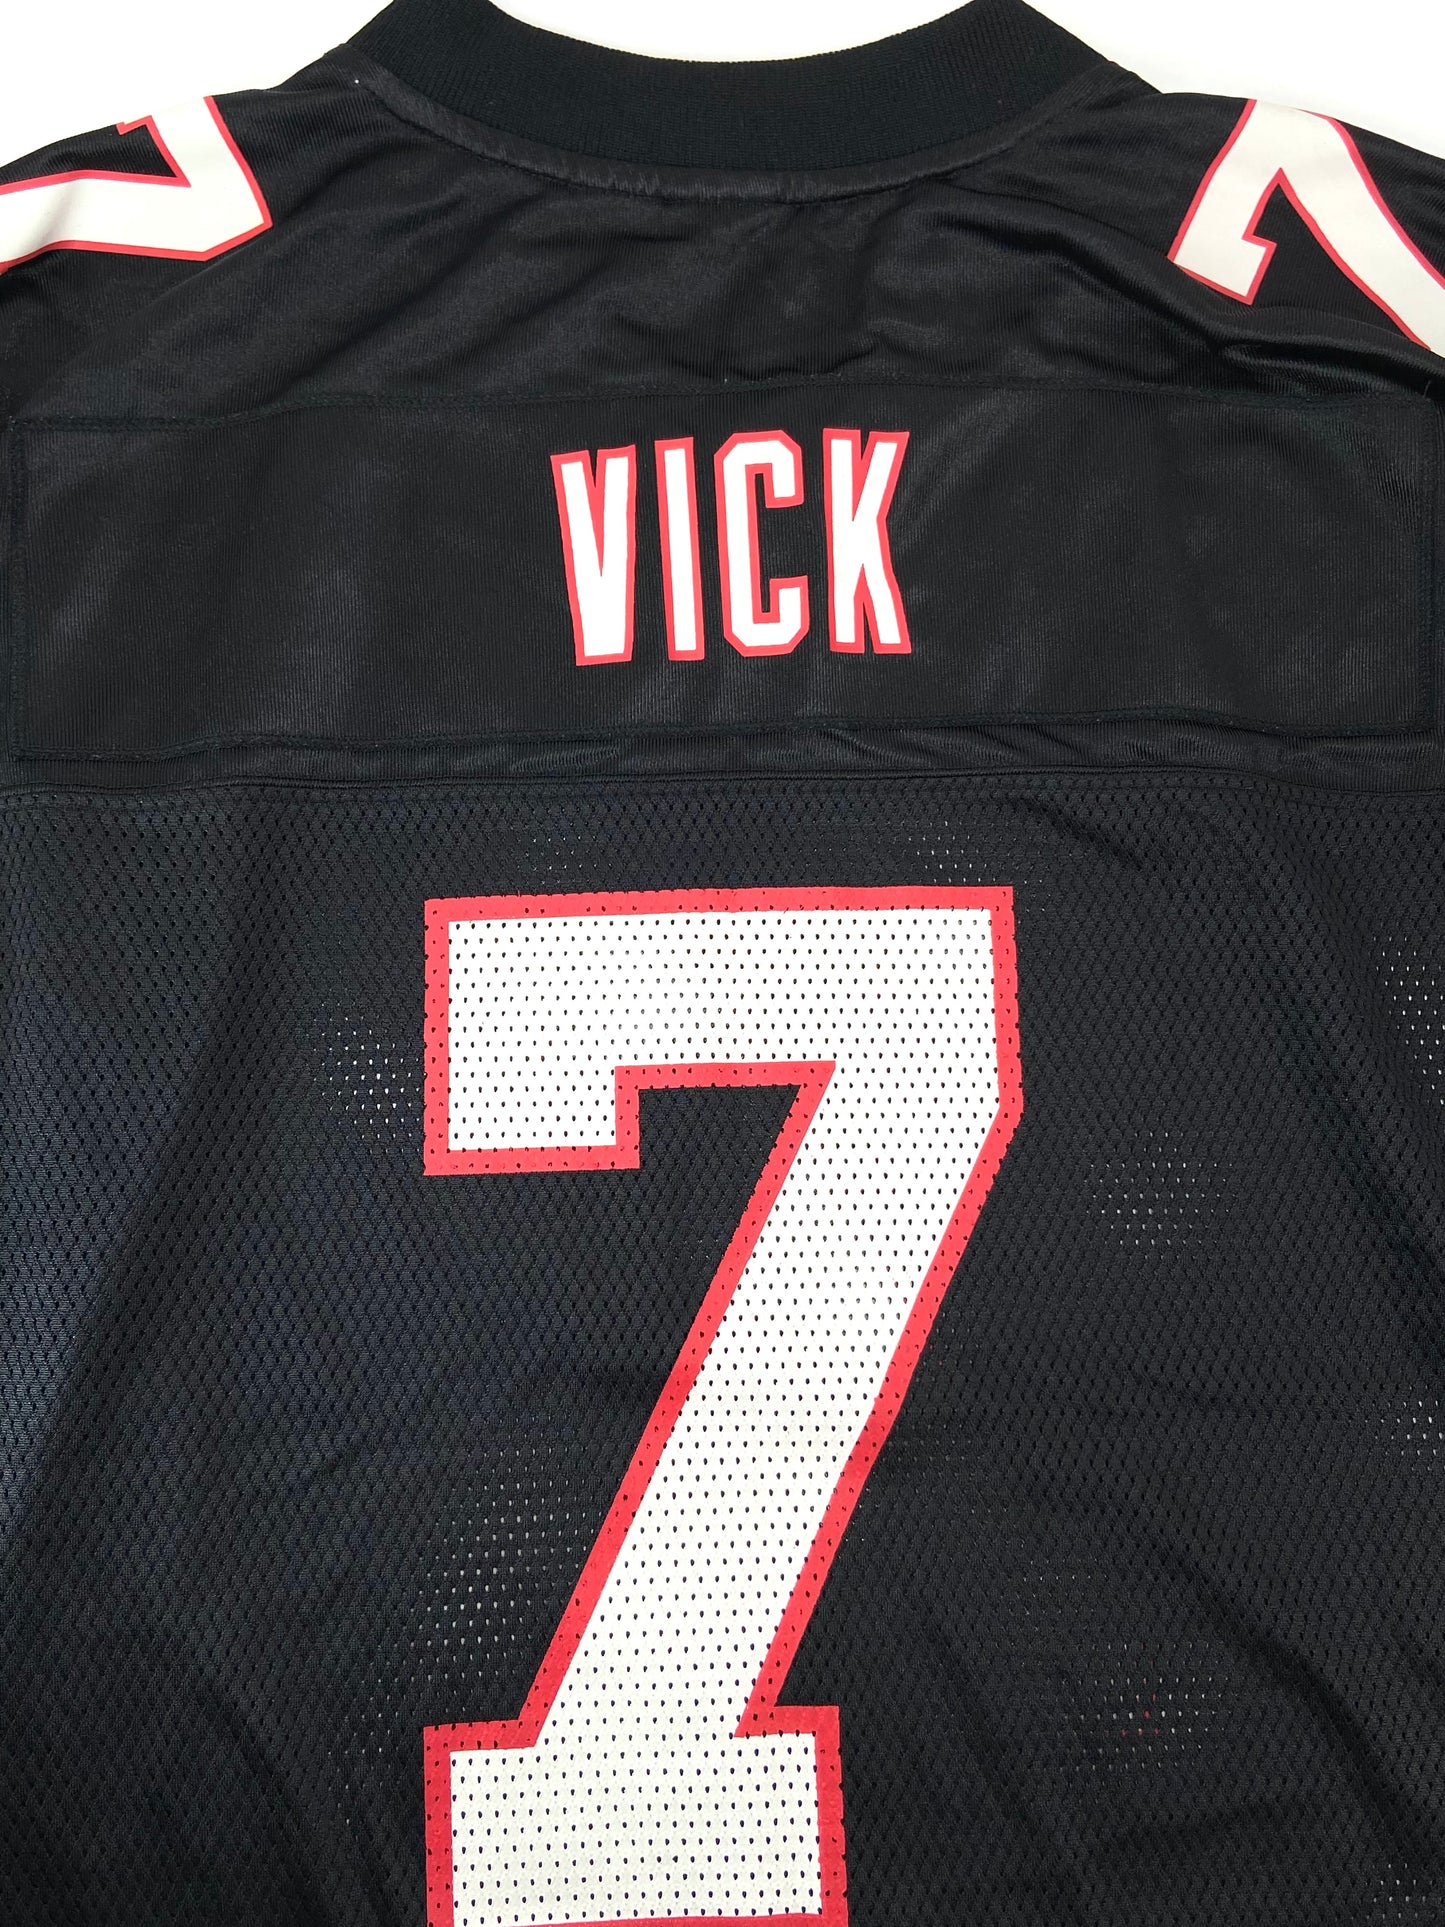 Michael Vick NFL Atlanta Falcons #7 Print Jersey Size Large Used